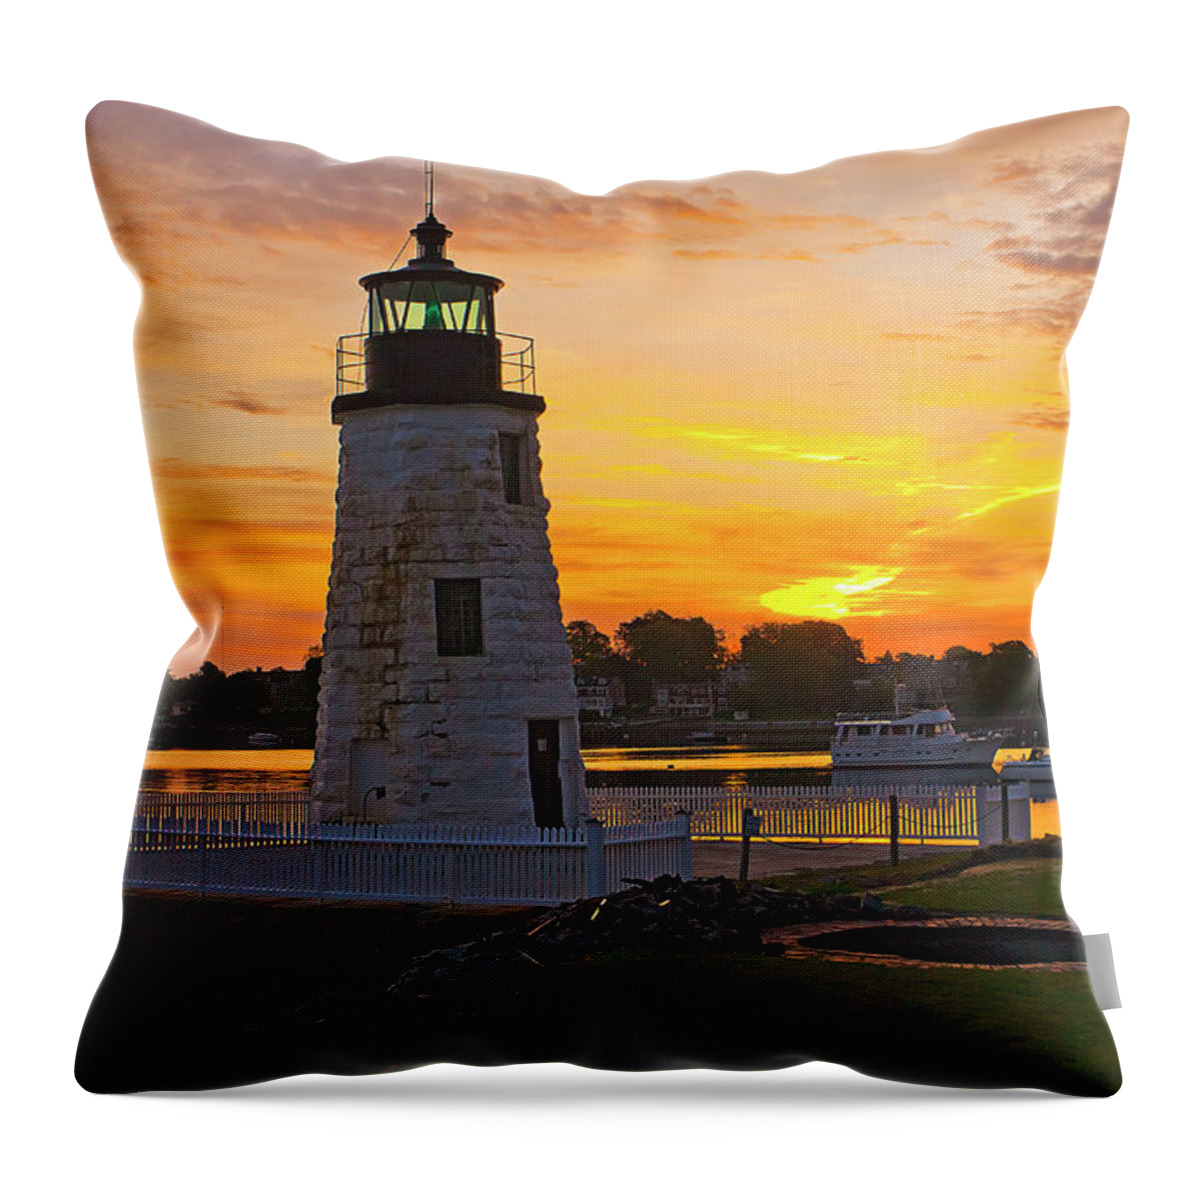 Estock Throw Pillow featuring the digital art Goat Island Light, Newport, Ri by Claudia Uripos